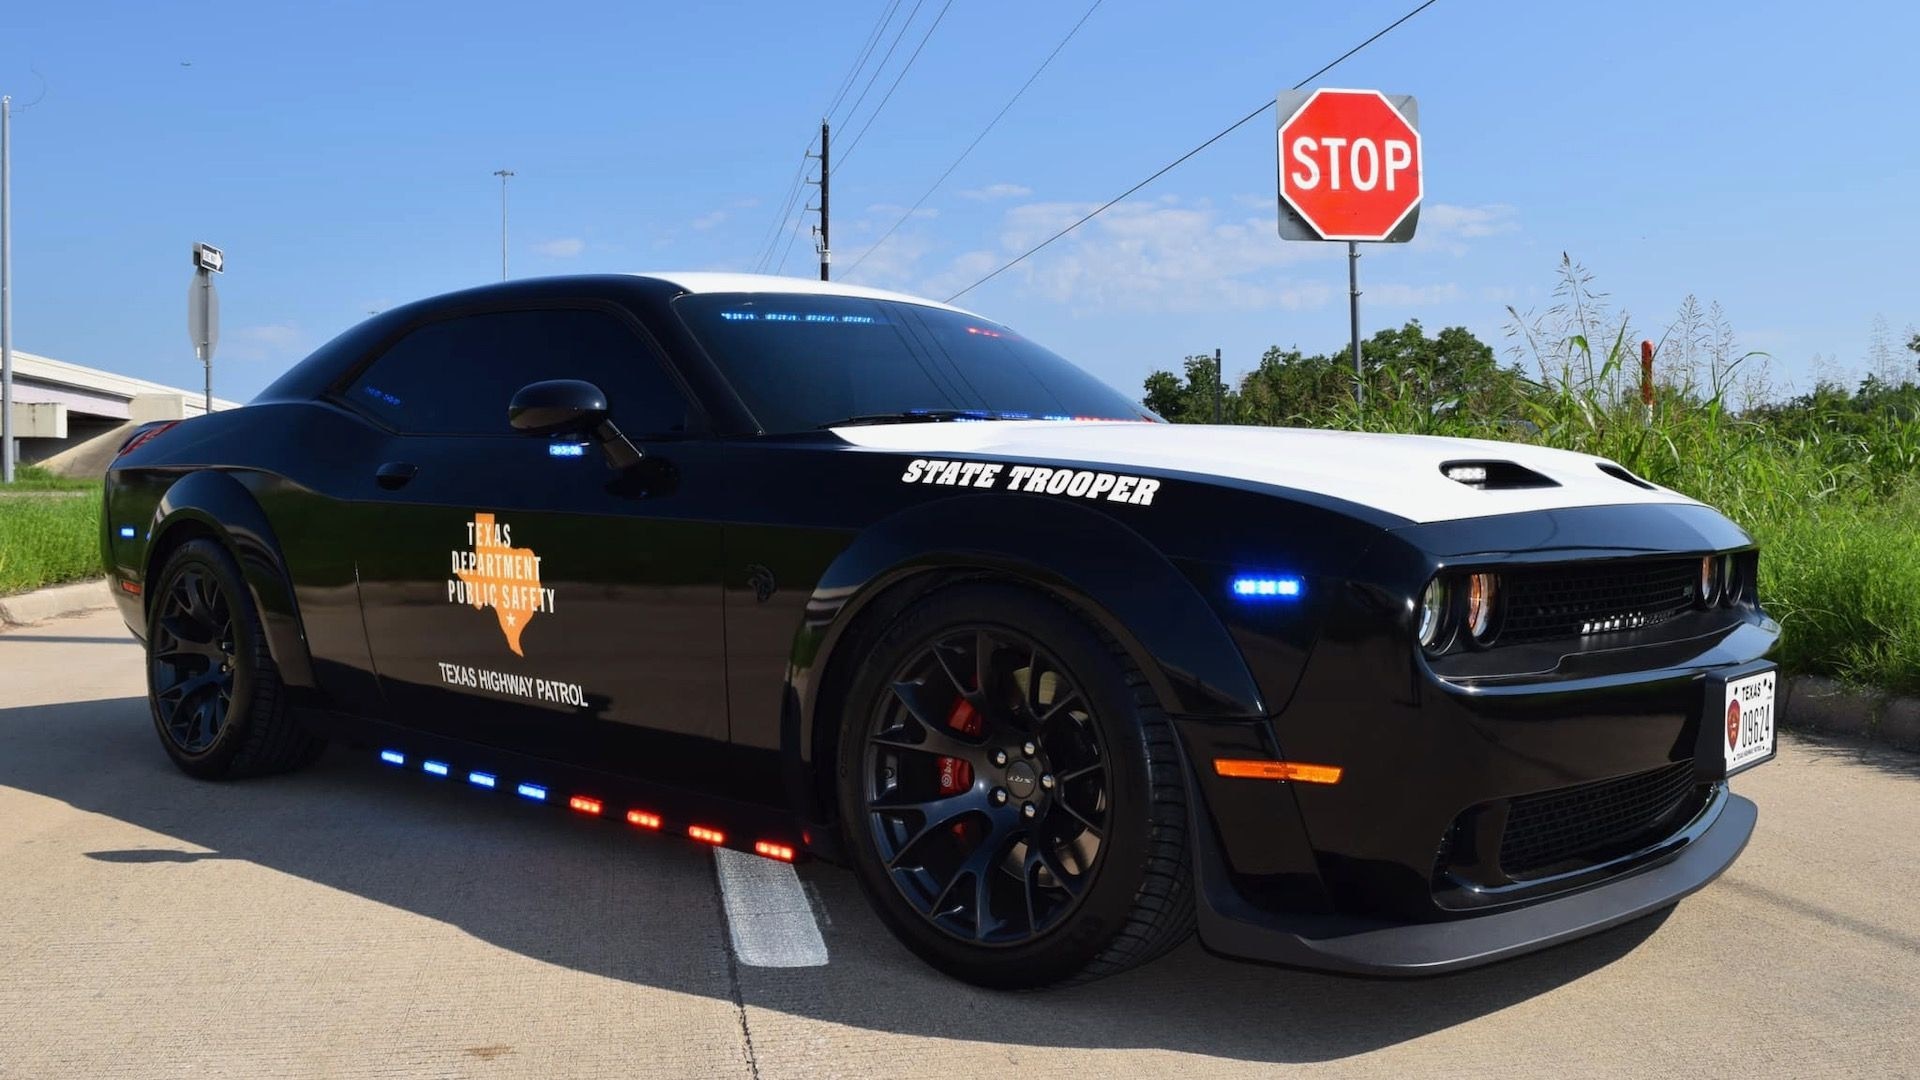 Texas Highway Patrol Dodge Challenger SRT Hellcat (photo via Facebook)